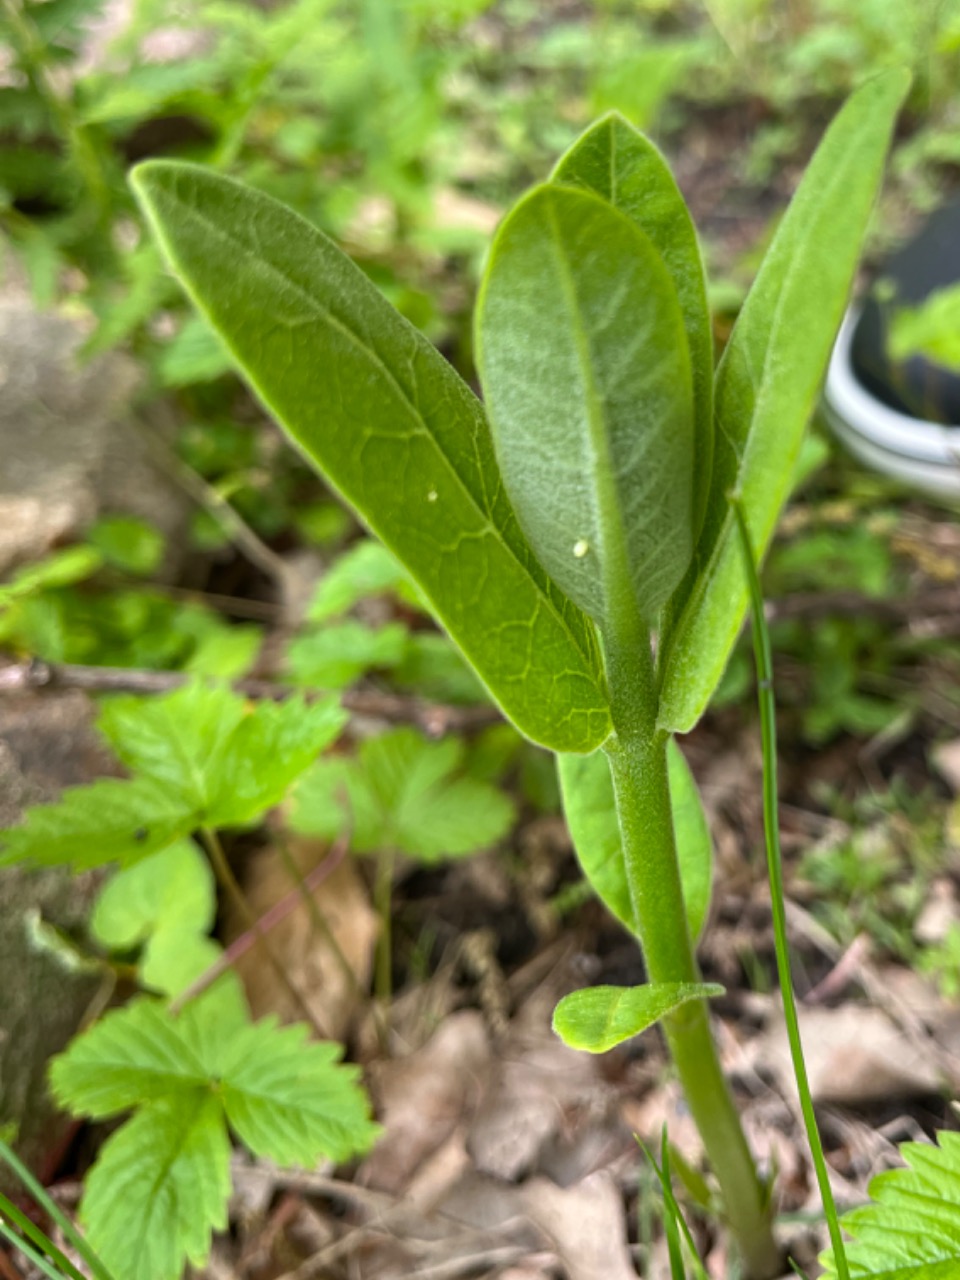 Monarch eggs on a milkweed plant